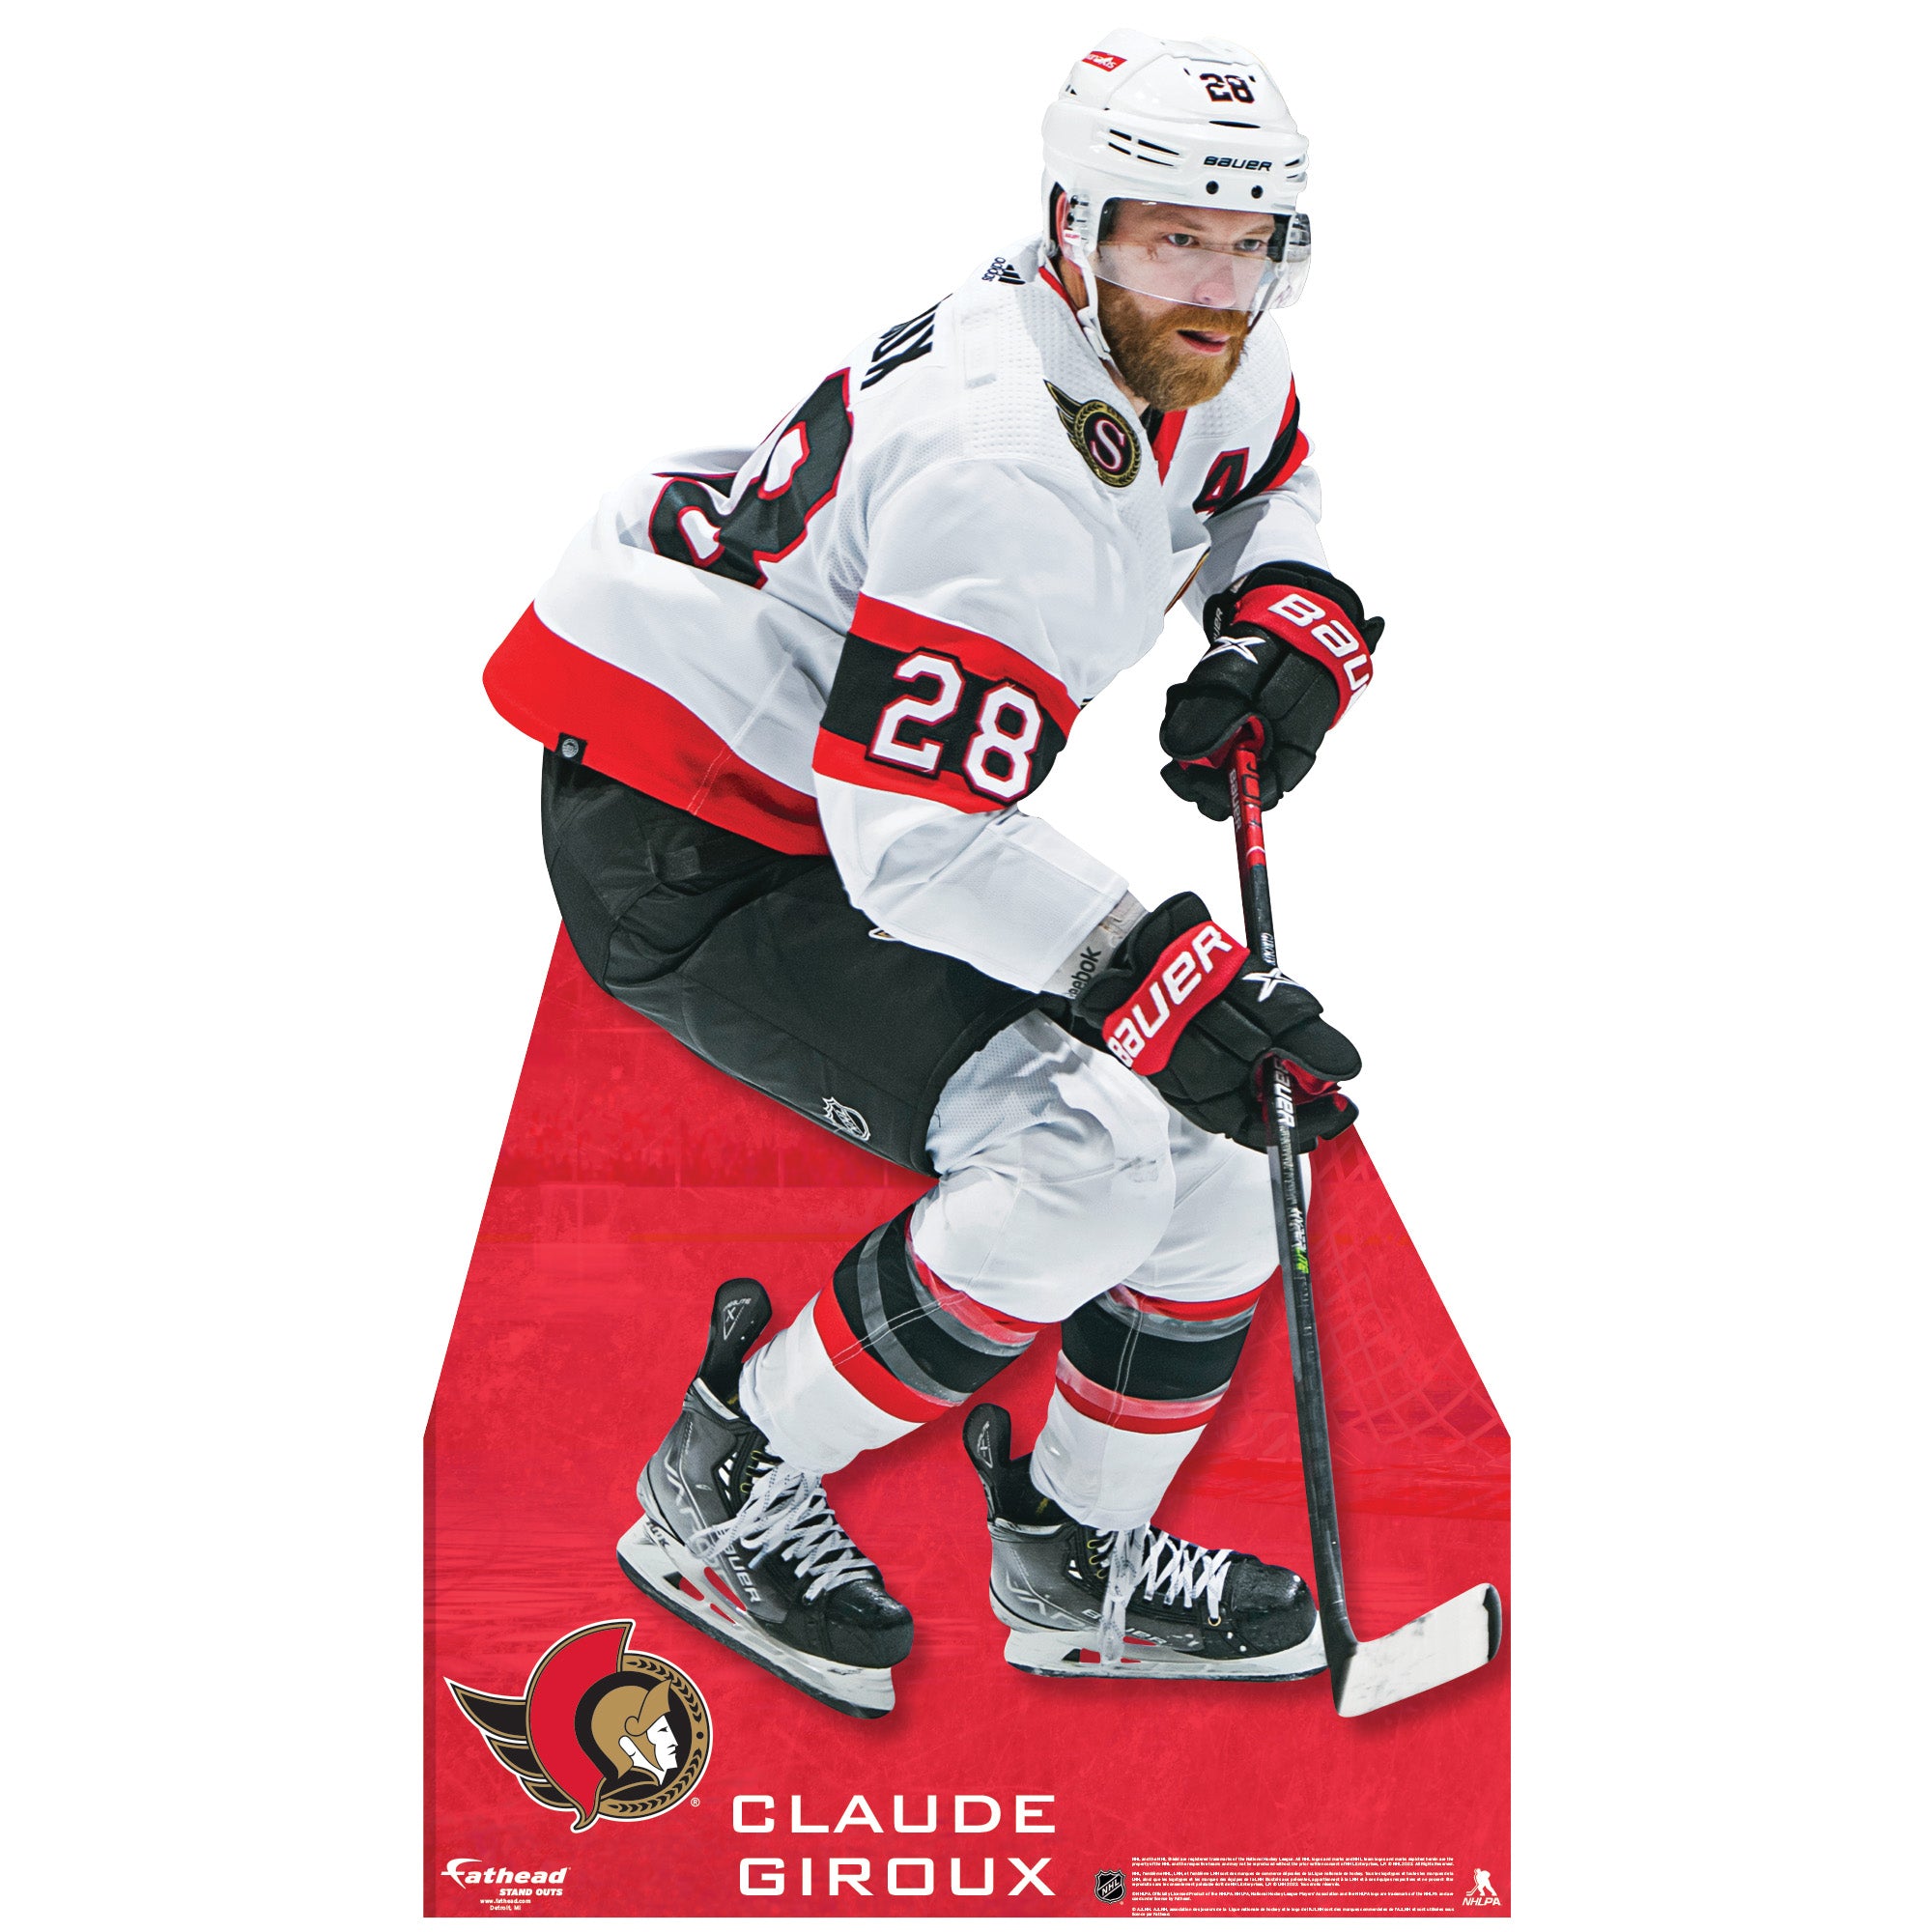 Claude Giroux's enjoying being 'home' with the Ottawa Senators